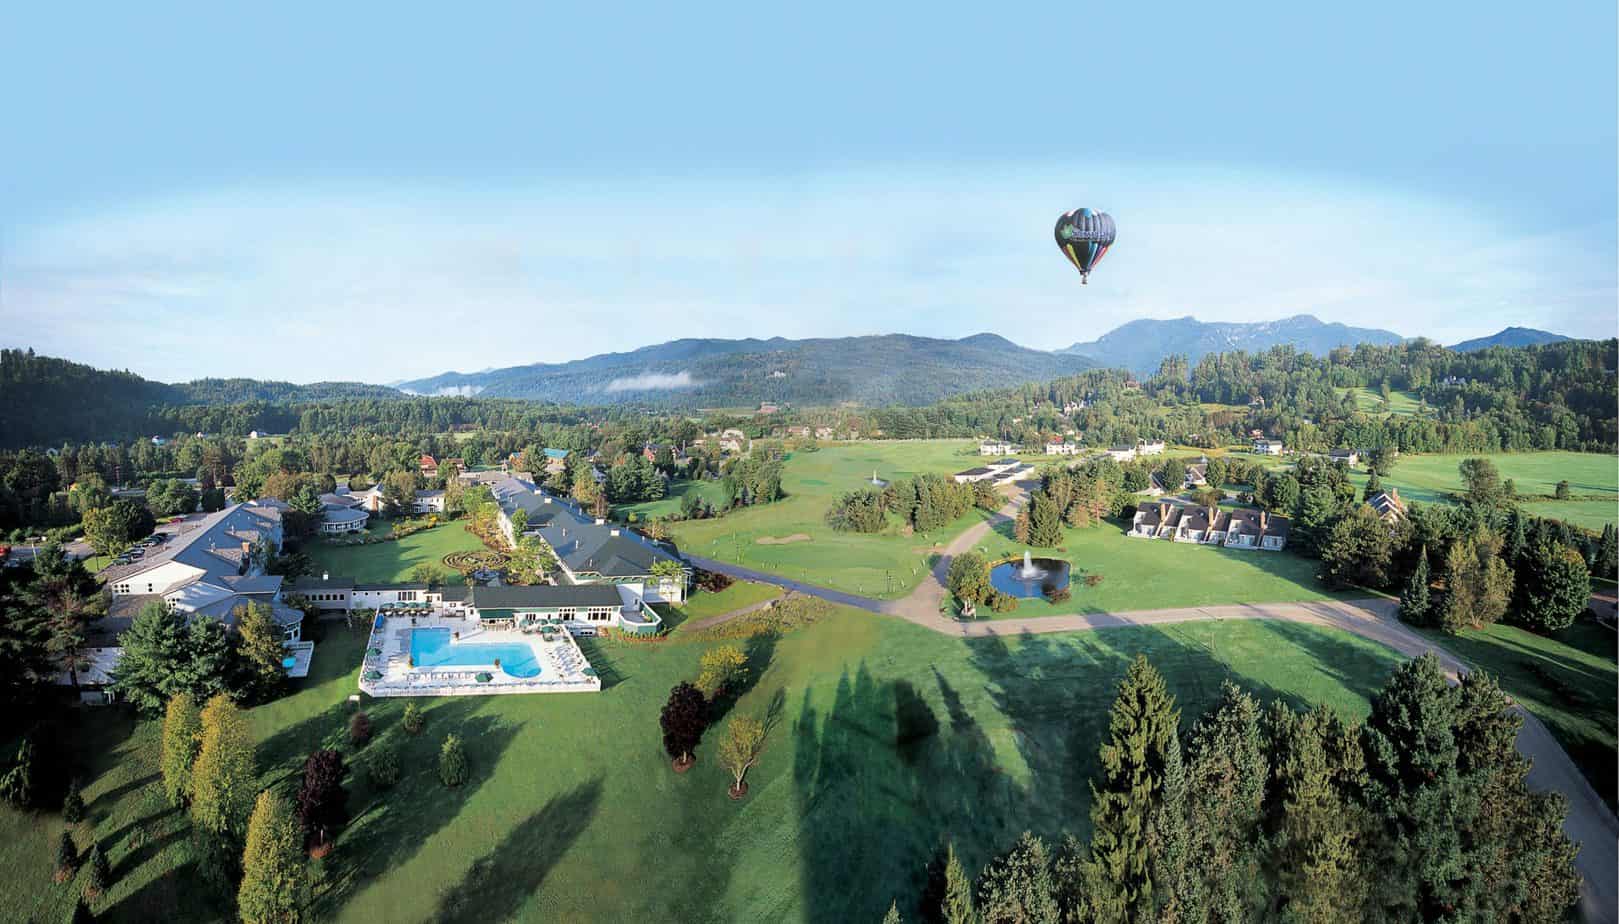 A hot air balloon floats over a town.